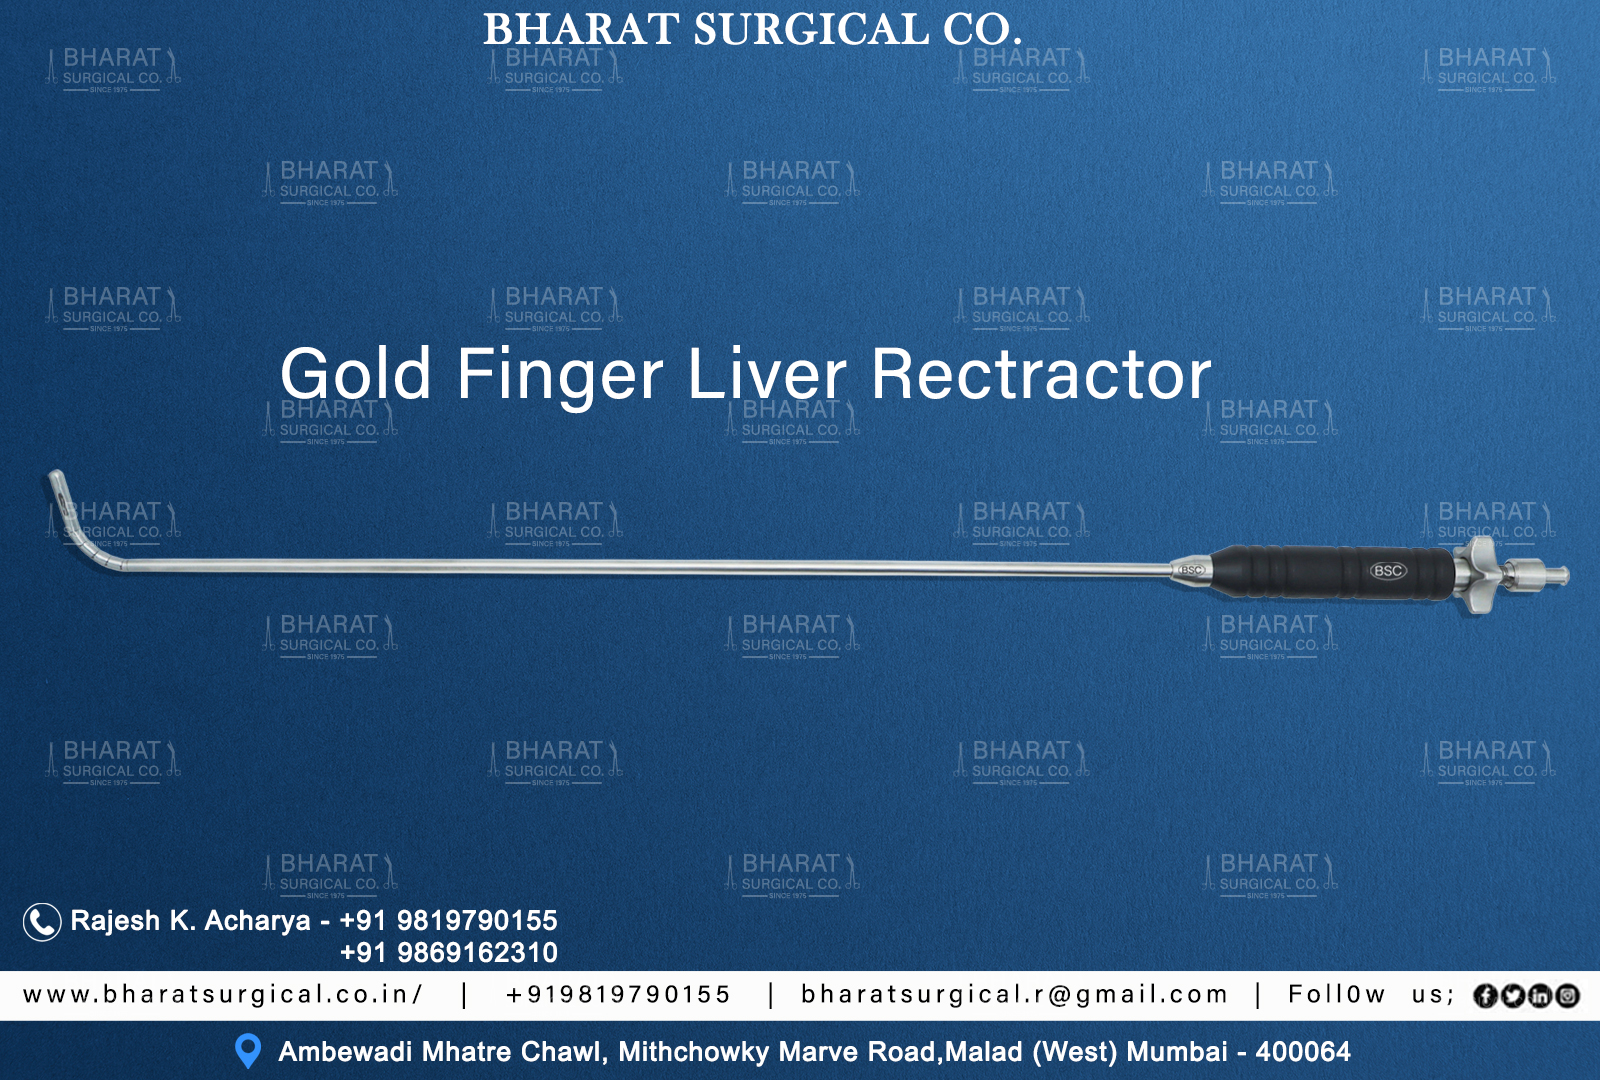 90 degree Golden-finger Liver Retractor manufacturers, Suppliers